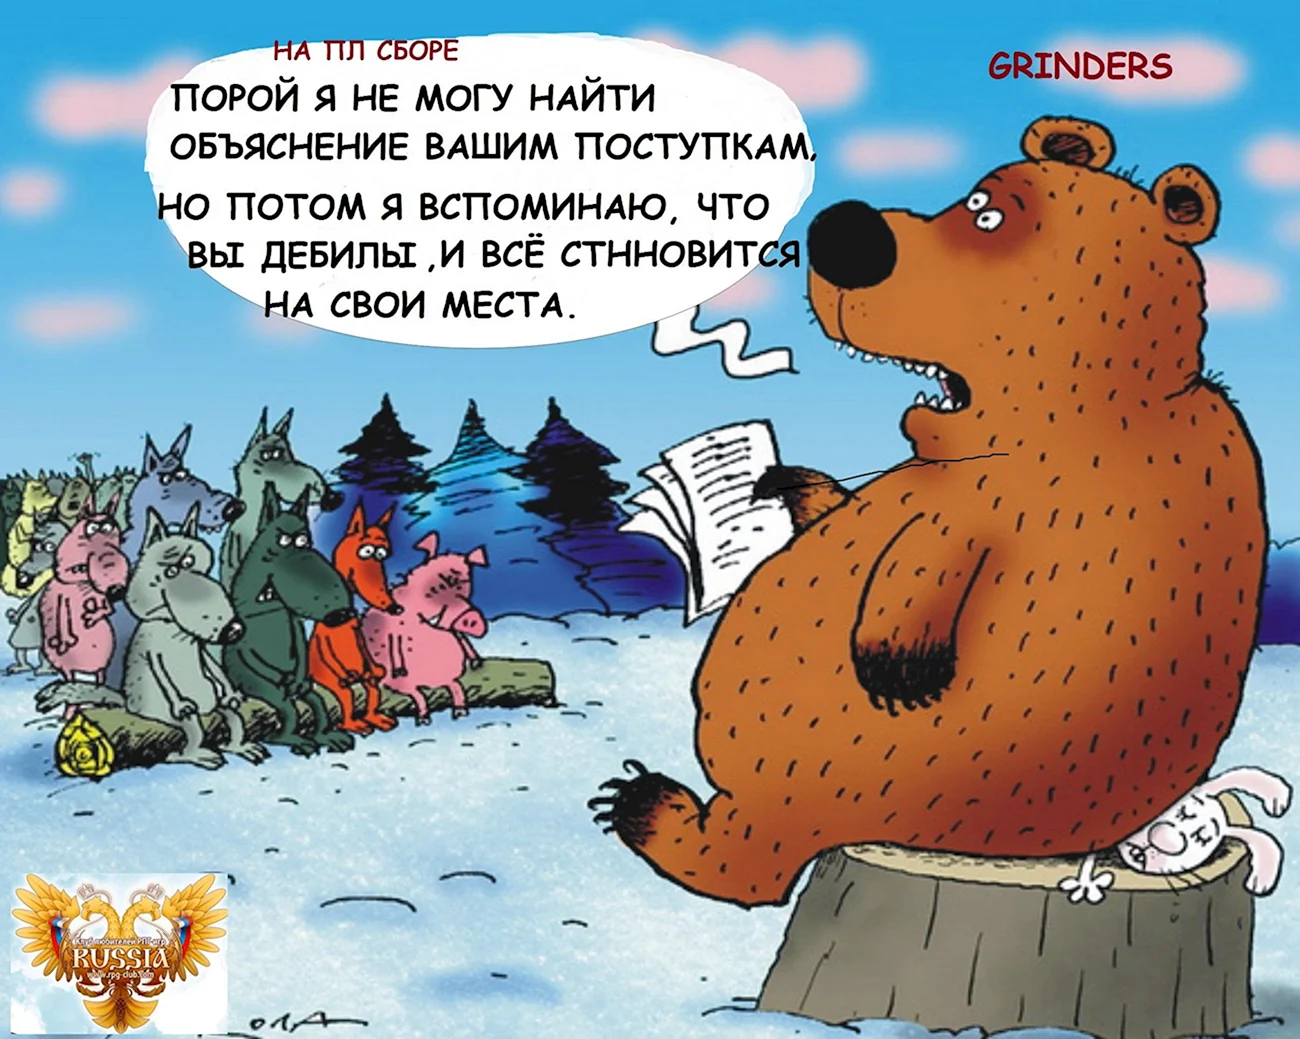 Медведь карикатура. Картинка